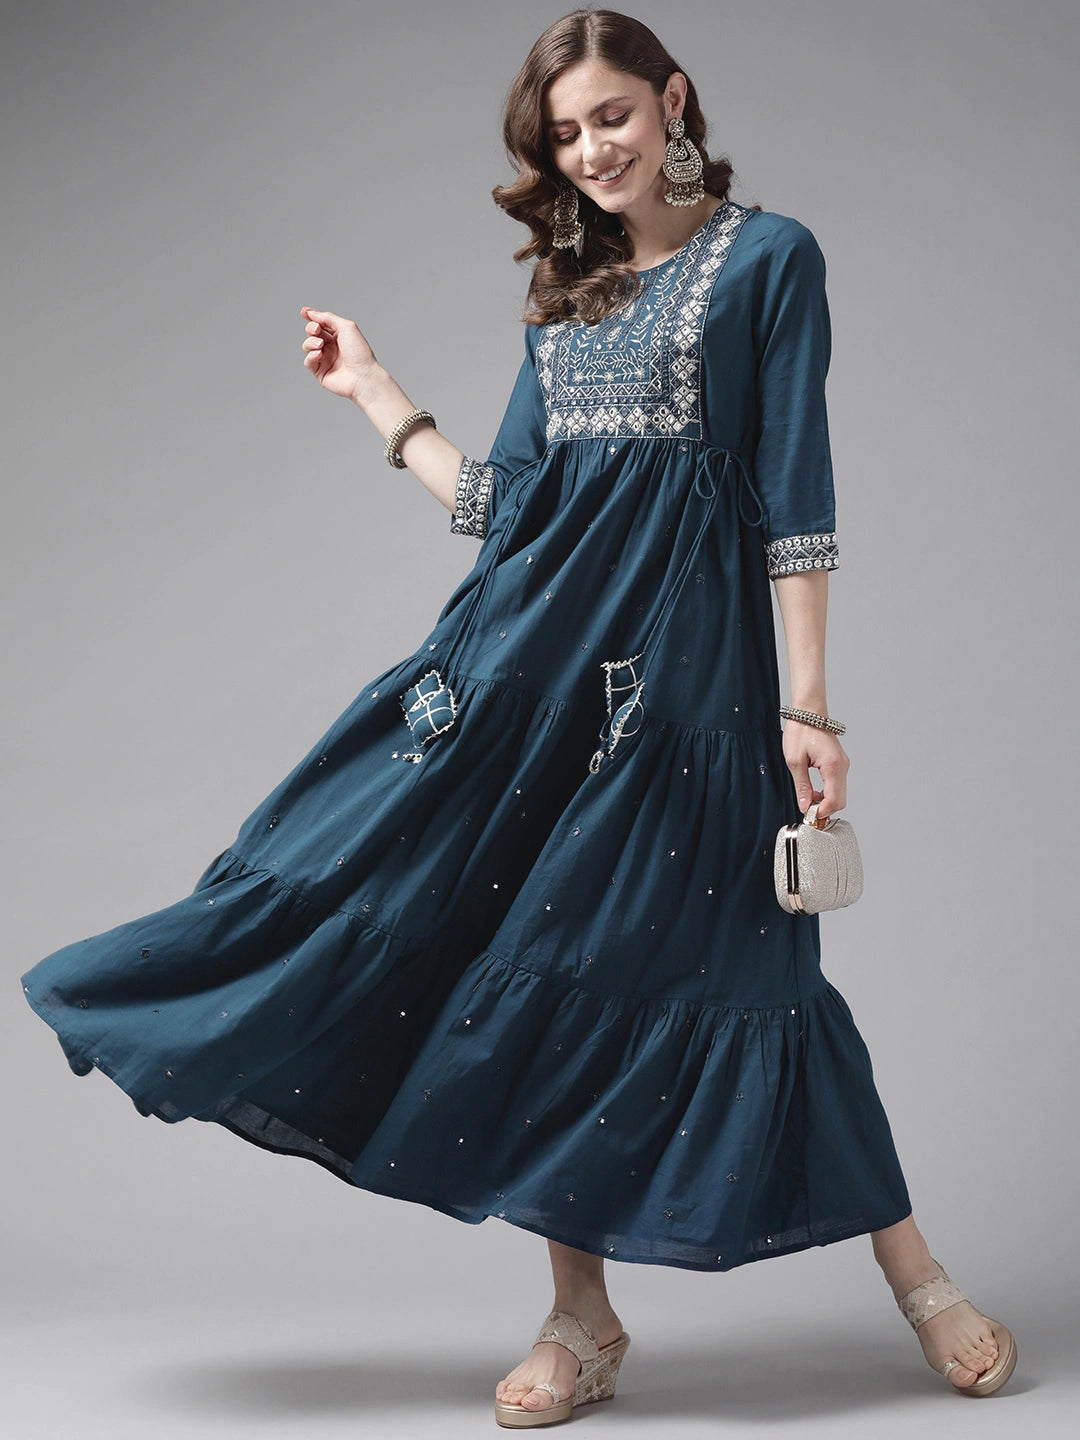 Teal Ethnic Motifs Cotton Dress-Yufta Store-2194DRSBLM